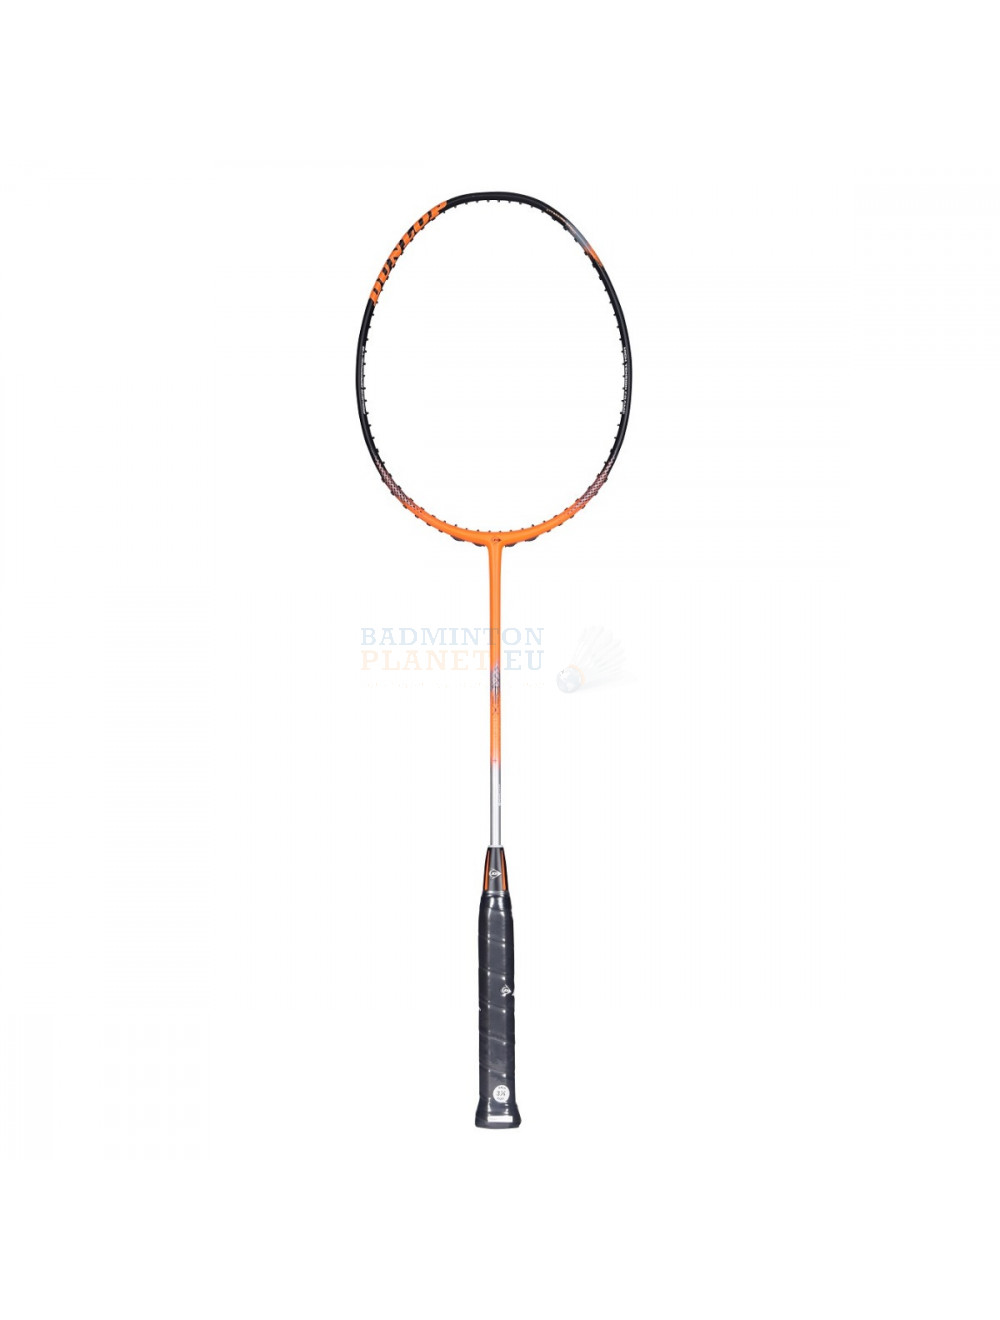 Dunlop Apex Infinity + badminton racket?